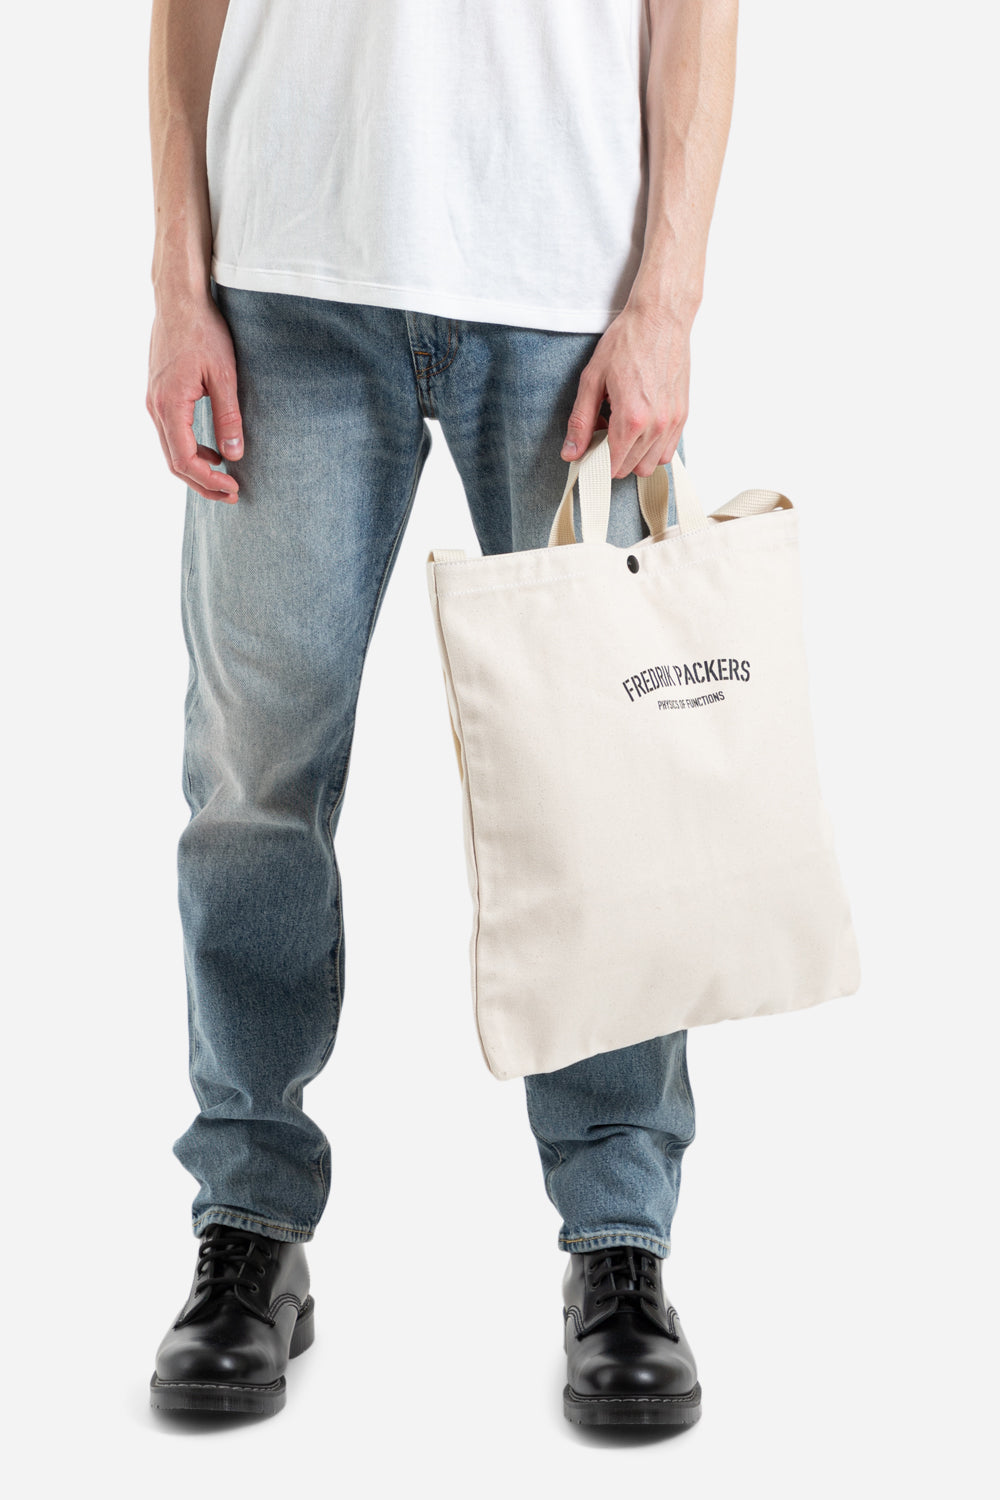 Fredrik_packers_duck-boots-shoulder-bag-white